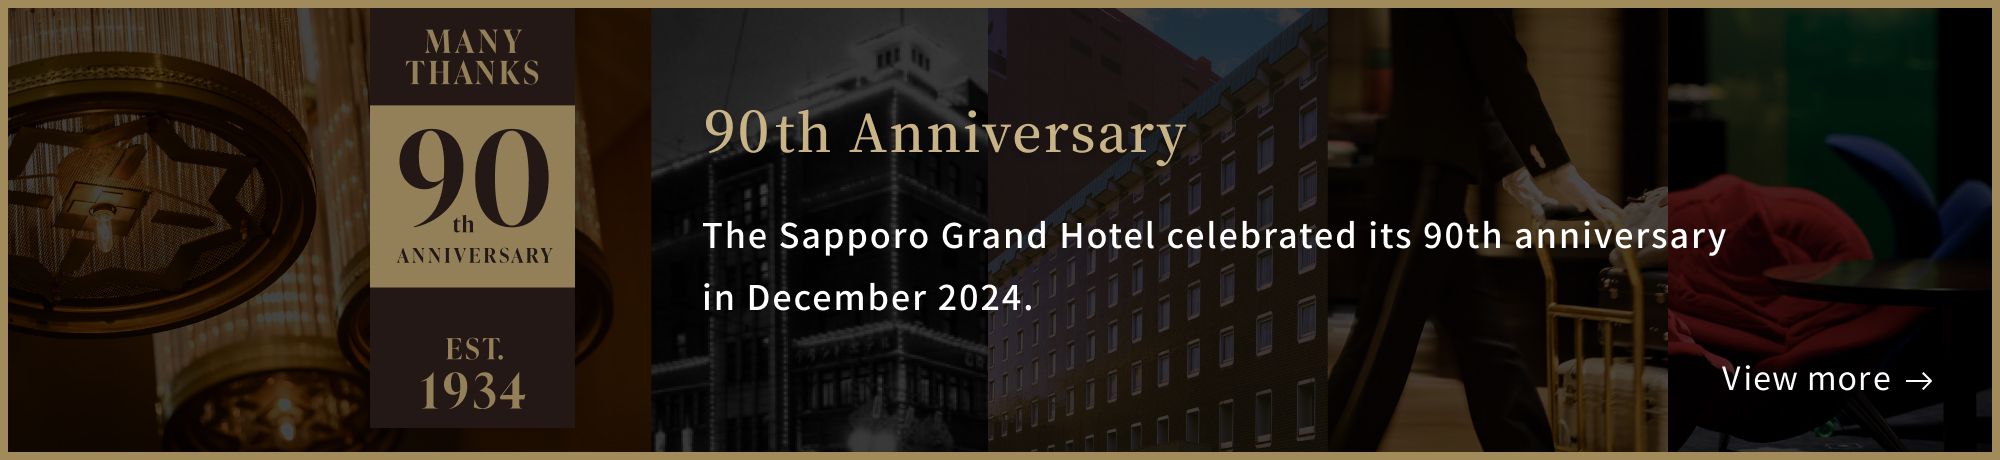 90th Anniversary The Sapporo Grand Hotel celebrated its 90th anniversary in December 2024.